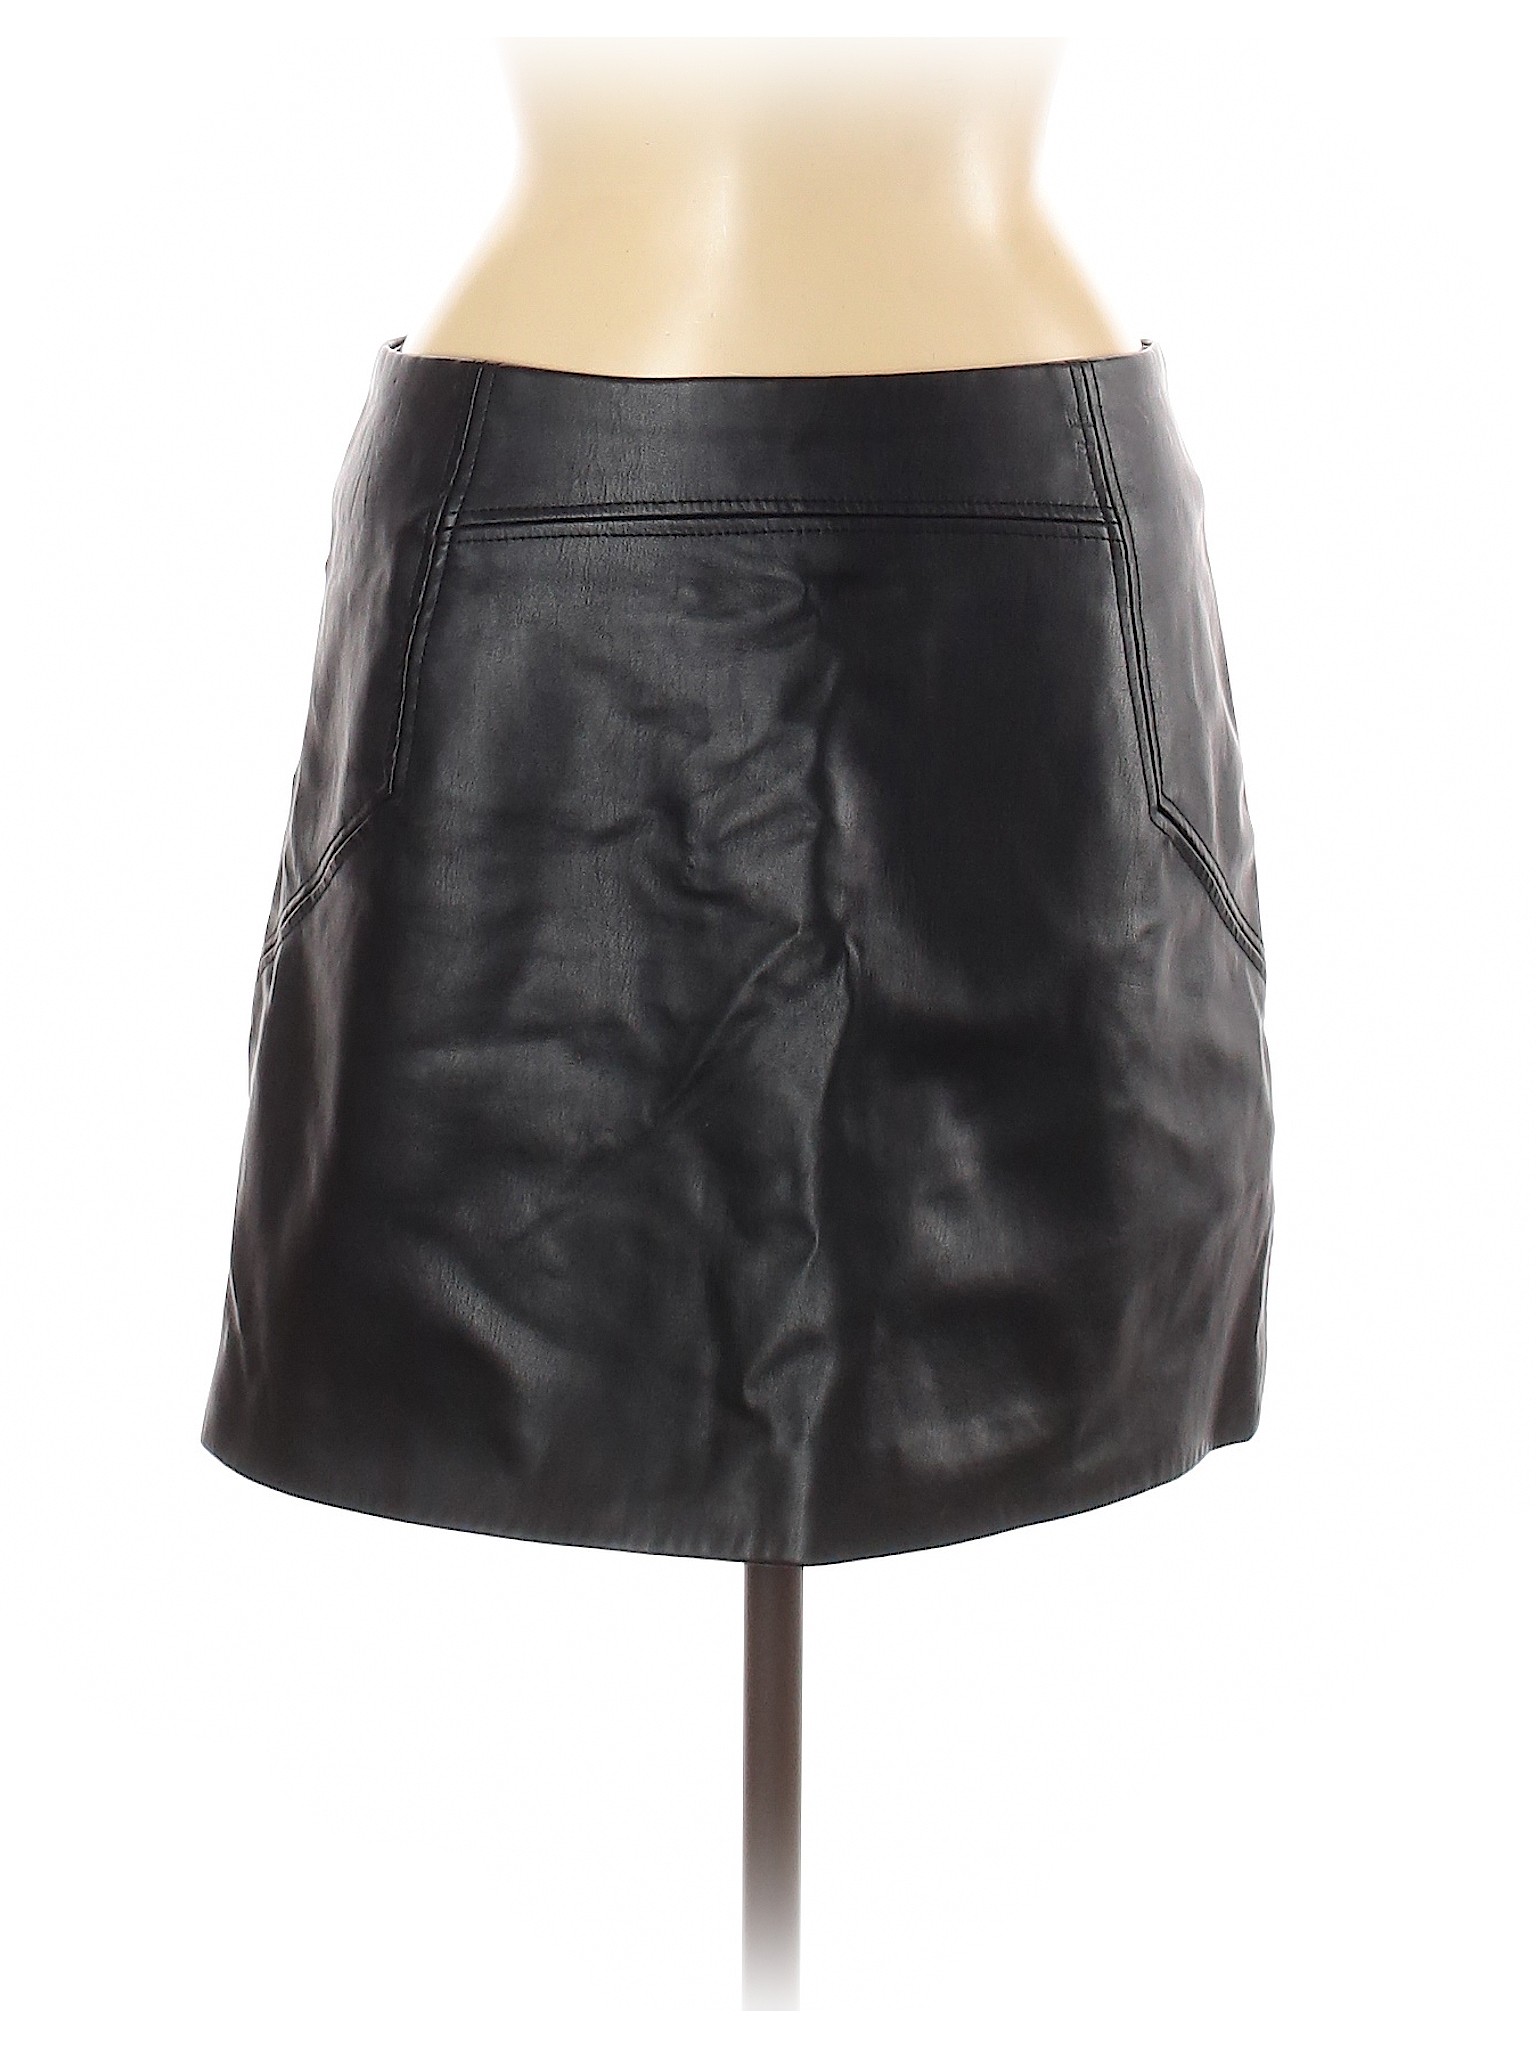 H&M Women Black Faux Leather Skirt 8 | eBay